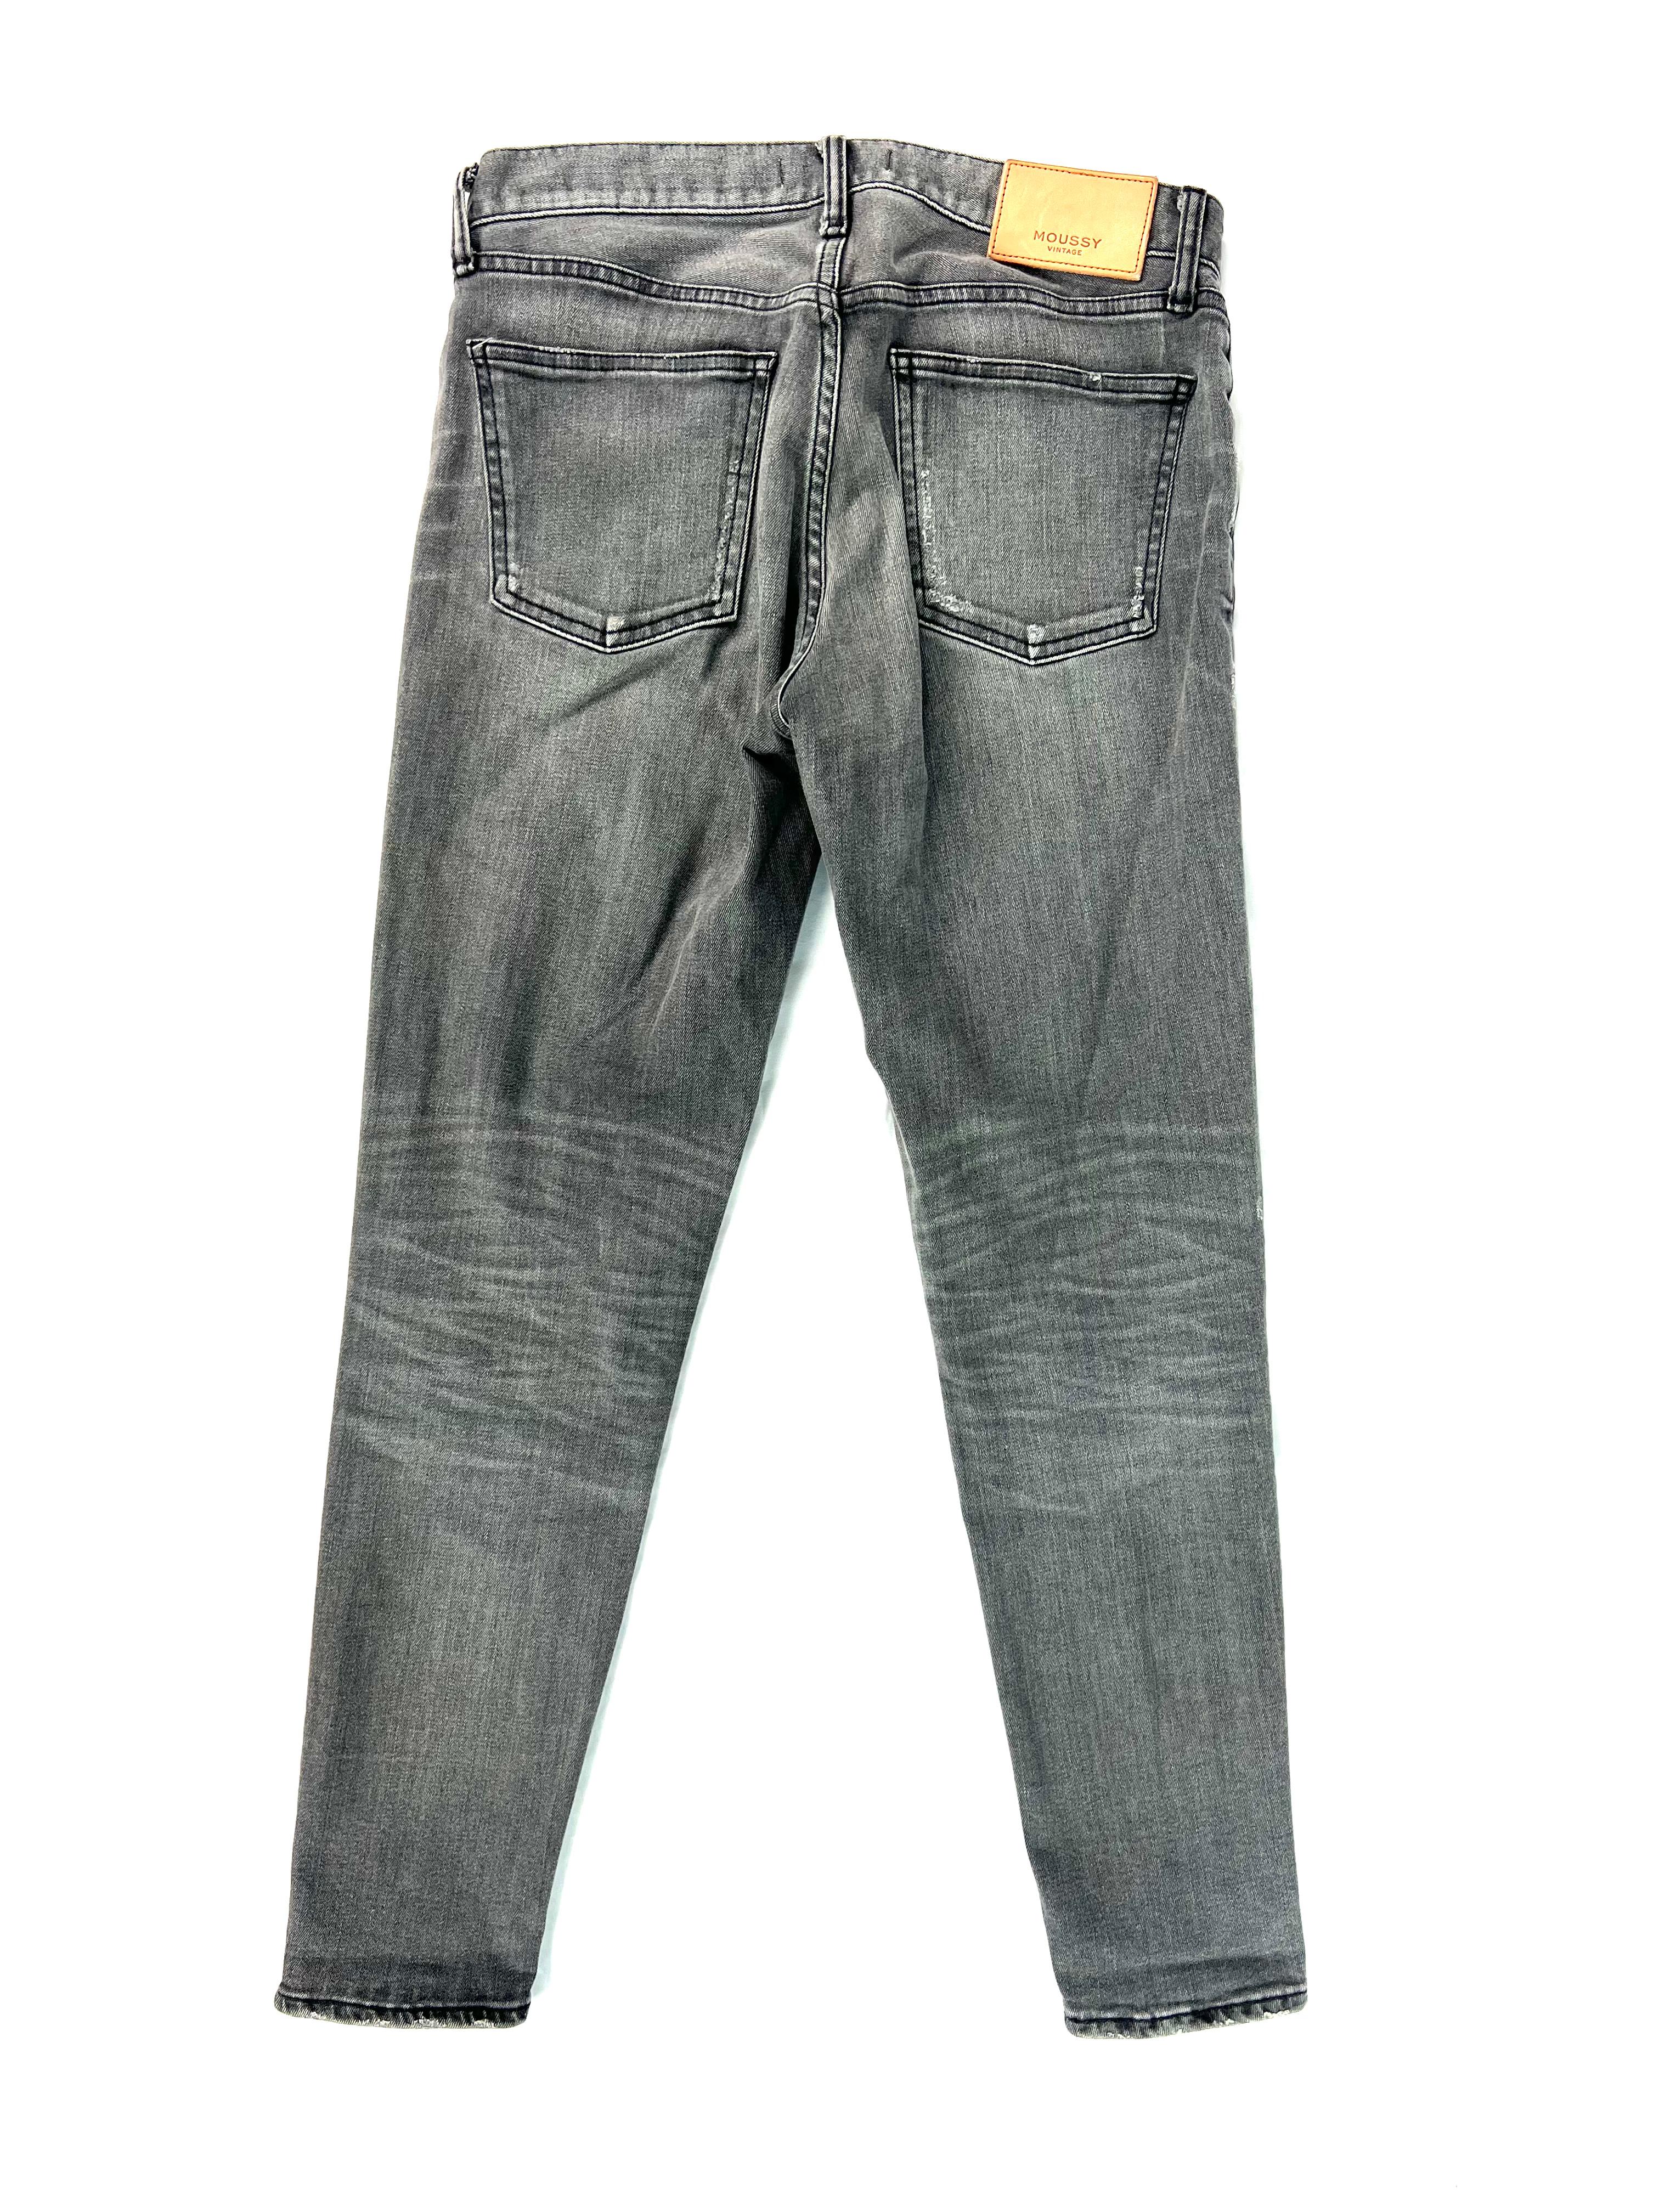 Black Mousy Vintage Grey Skinny Denim Jean Pants, Size 27 For Sale